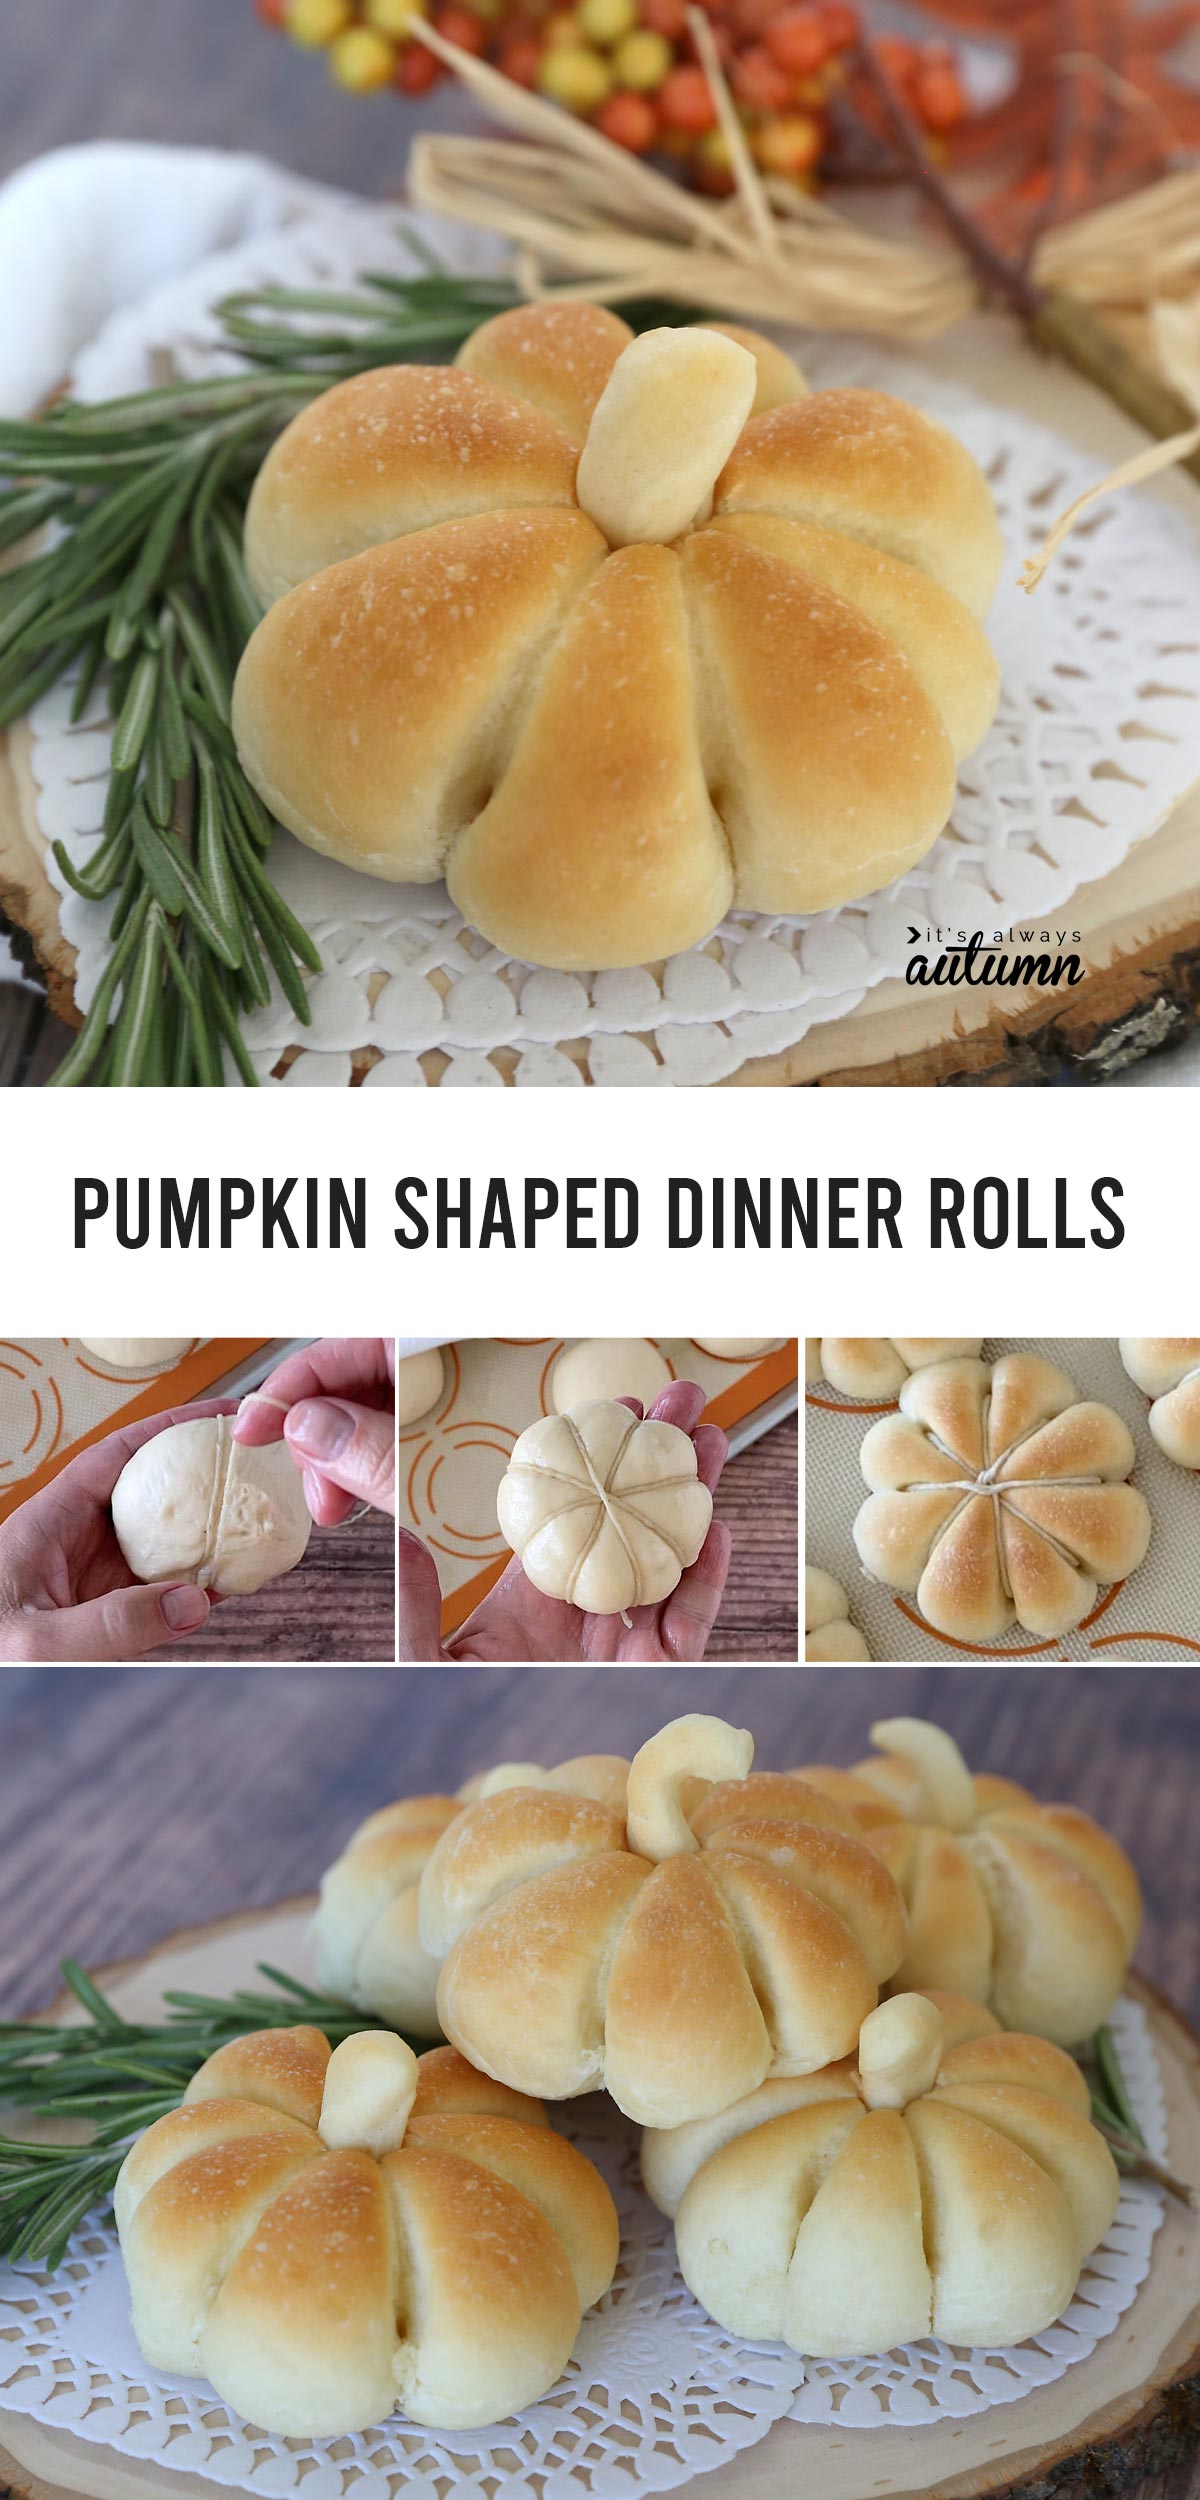 Learn how to make pumpkin shaped dinner rolls!